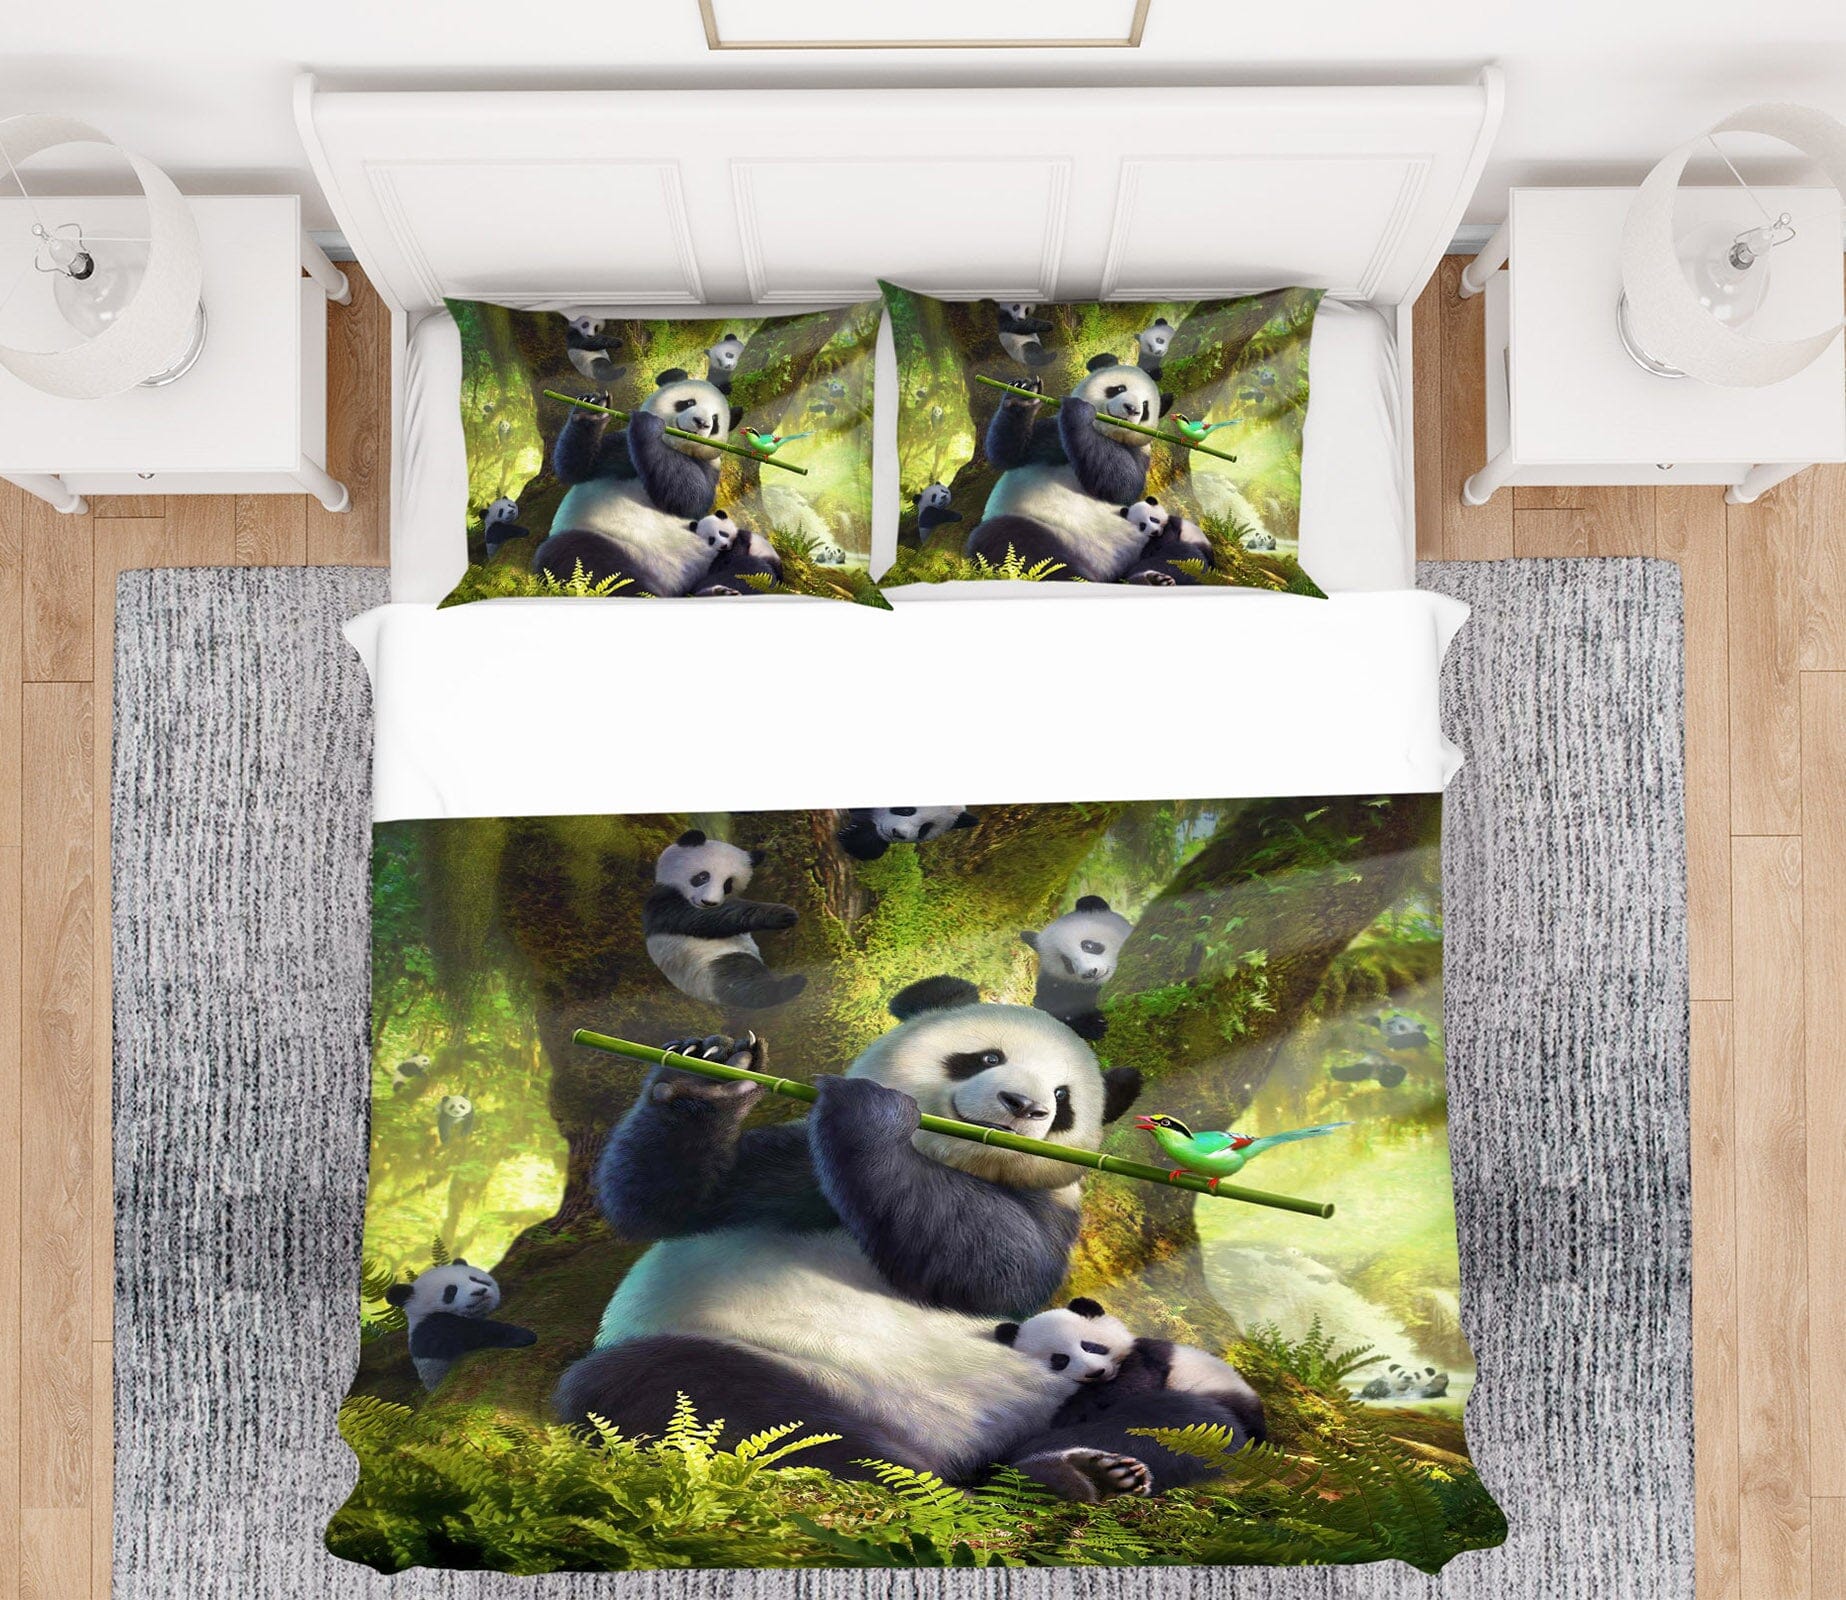 3D Panda Bear 2129 Jerry LoFaro bedding Bed Pillowcases Quilt Quiet Covers AJ Creativity Home 